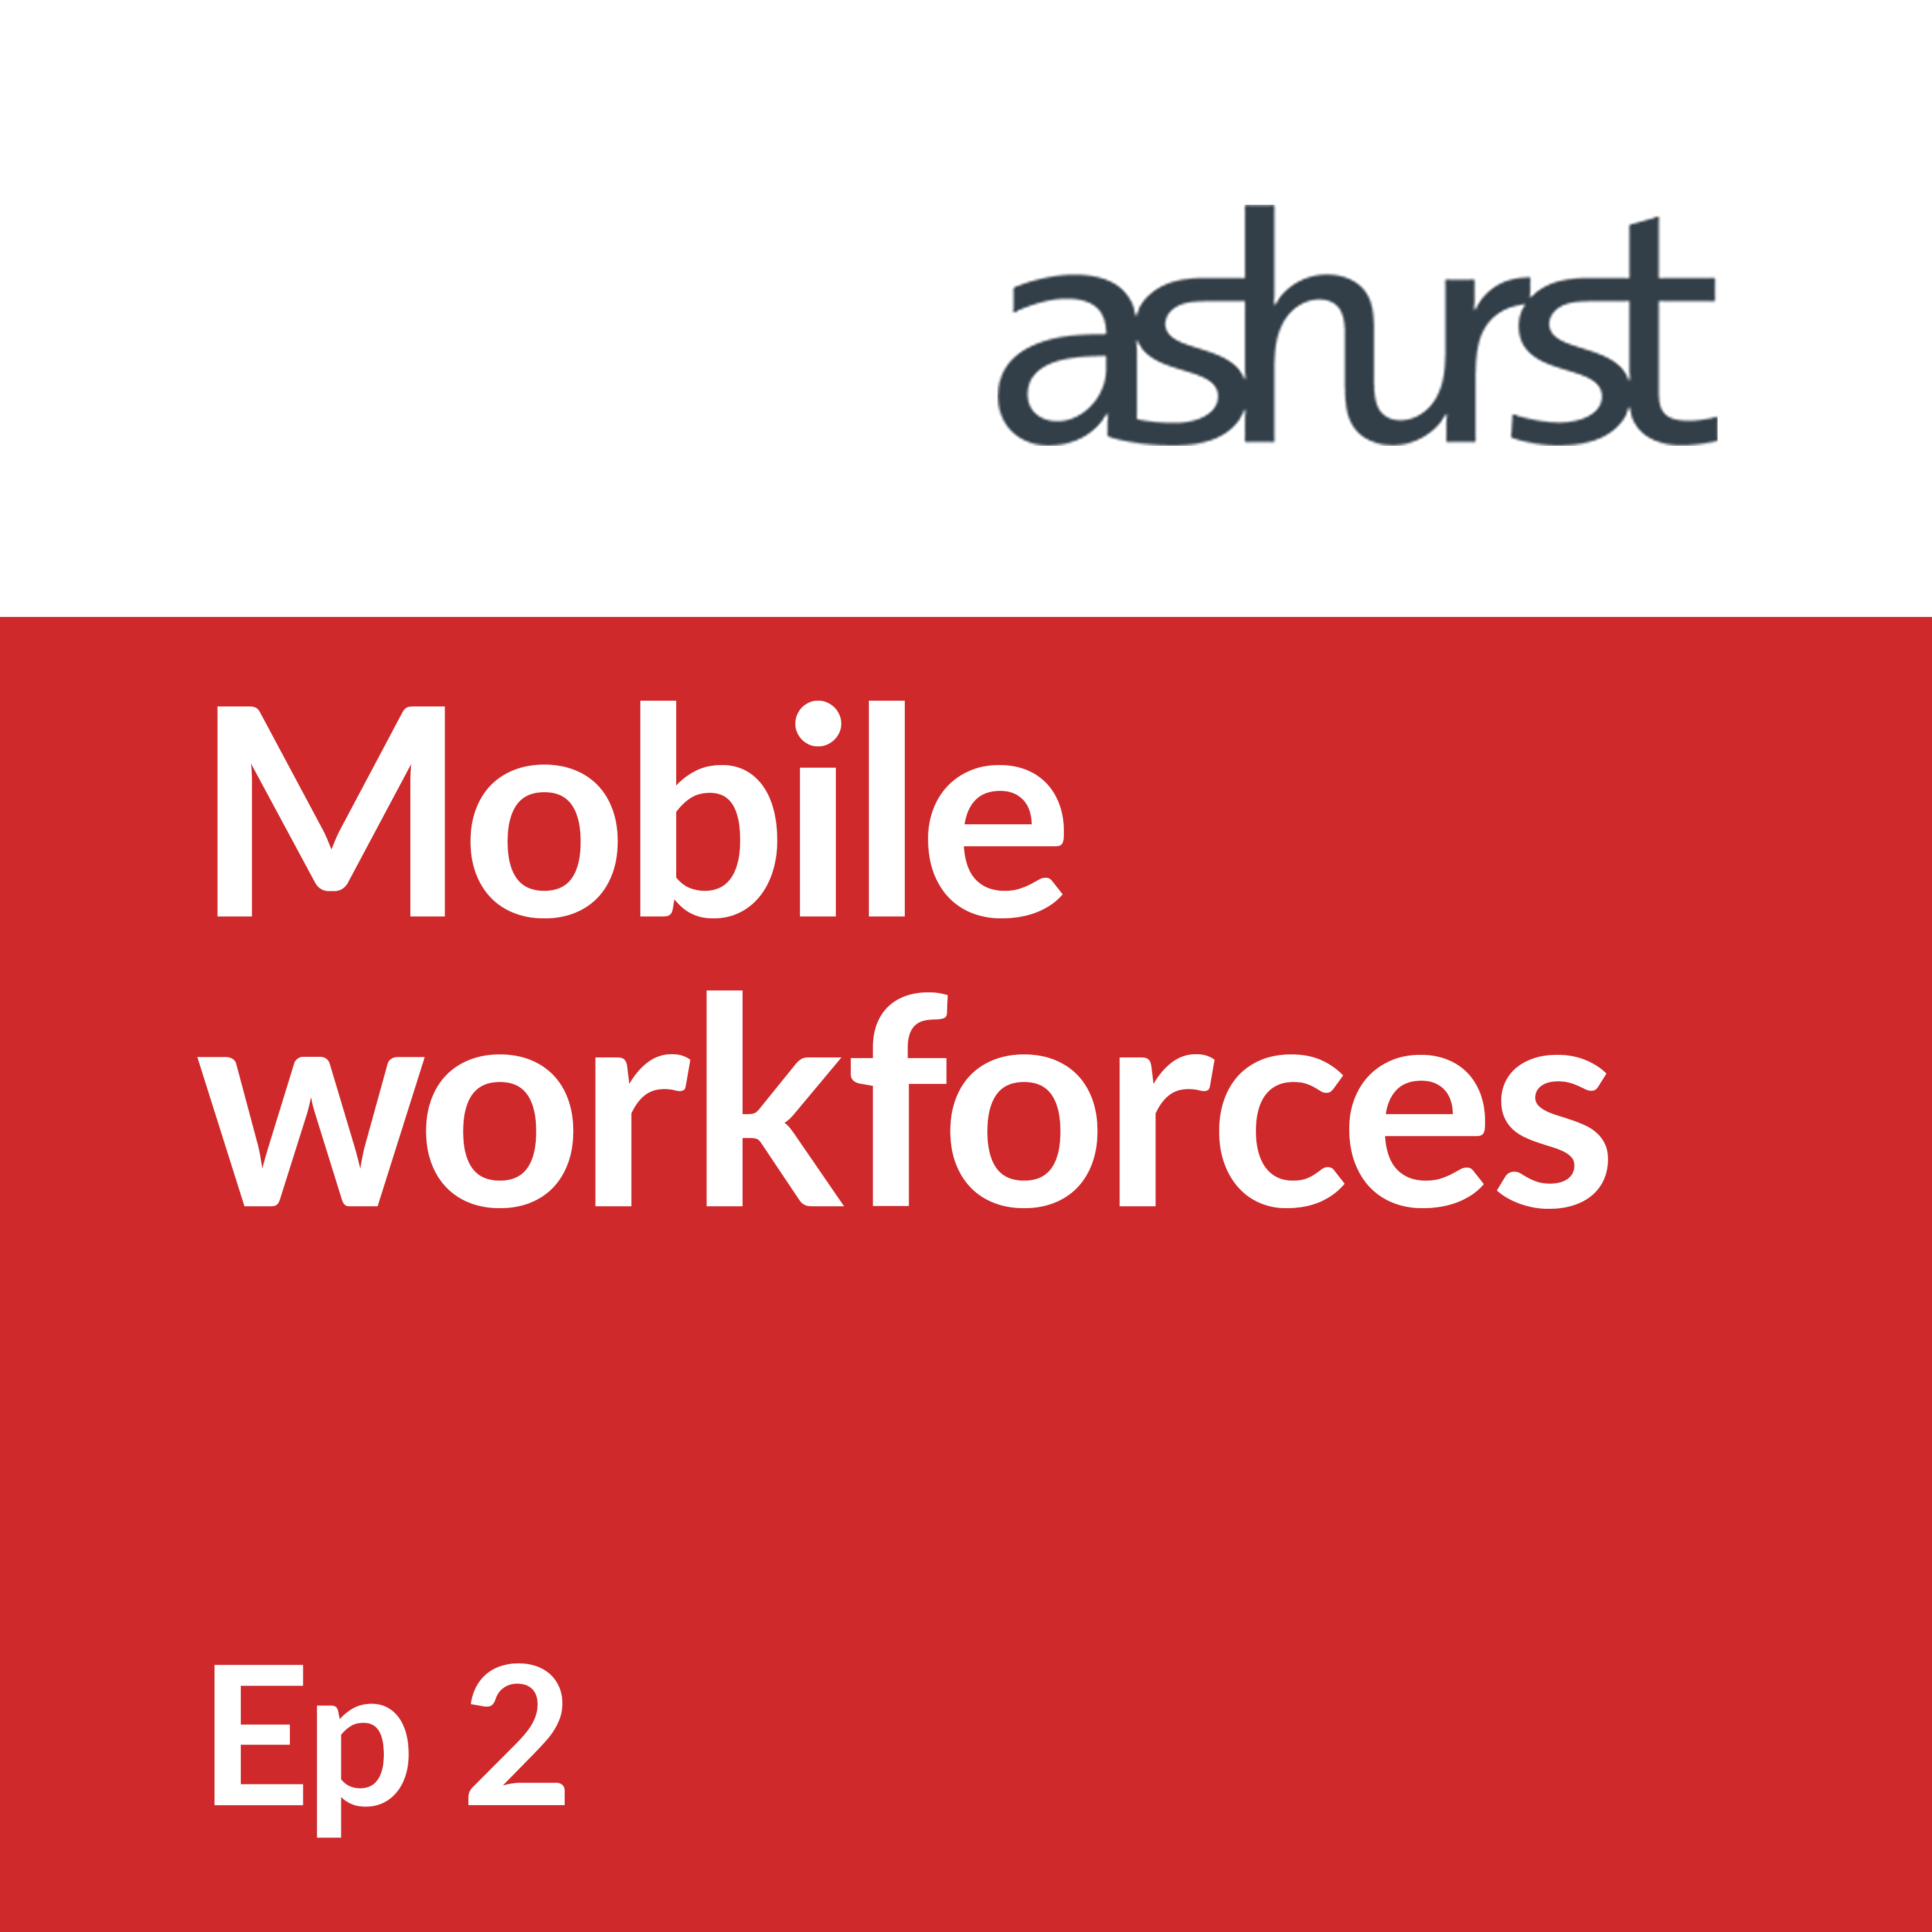 Mobile workforces episode 2